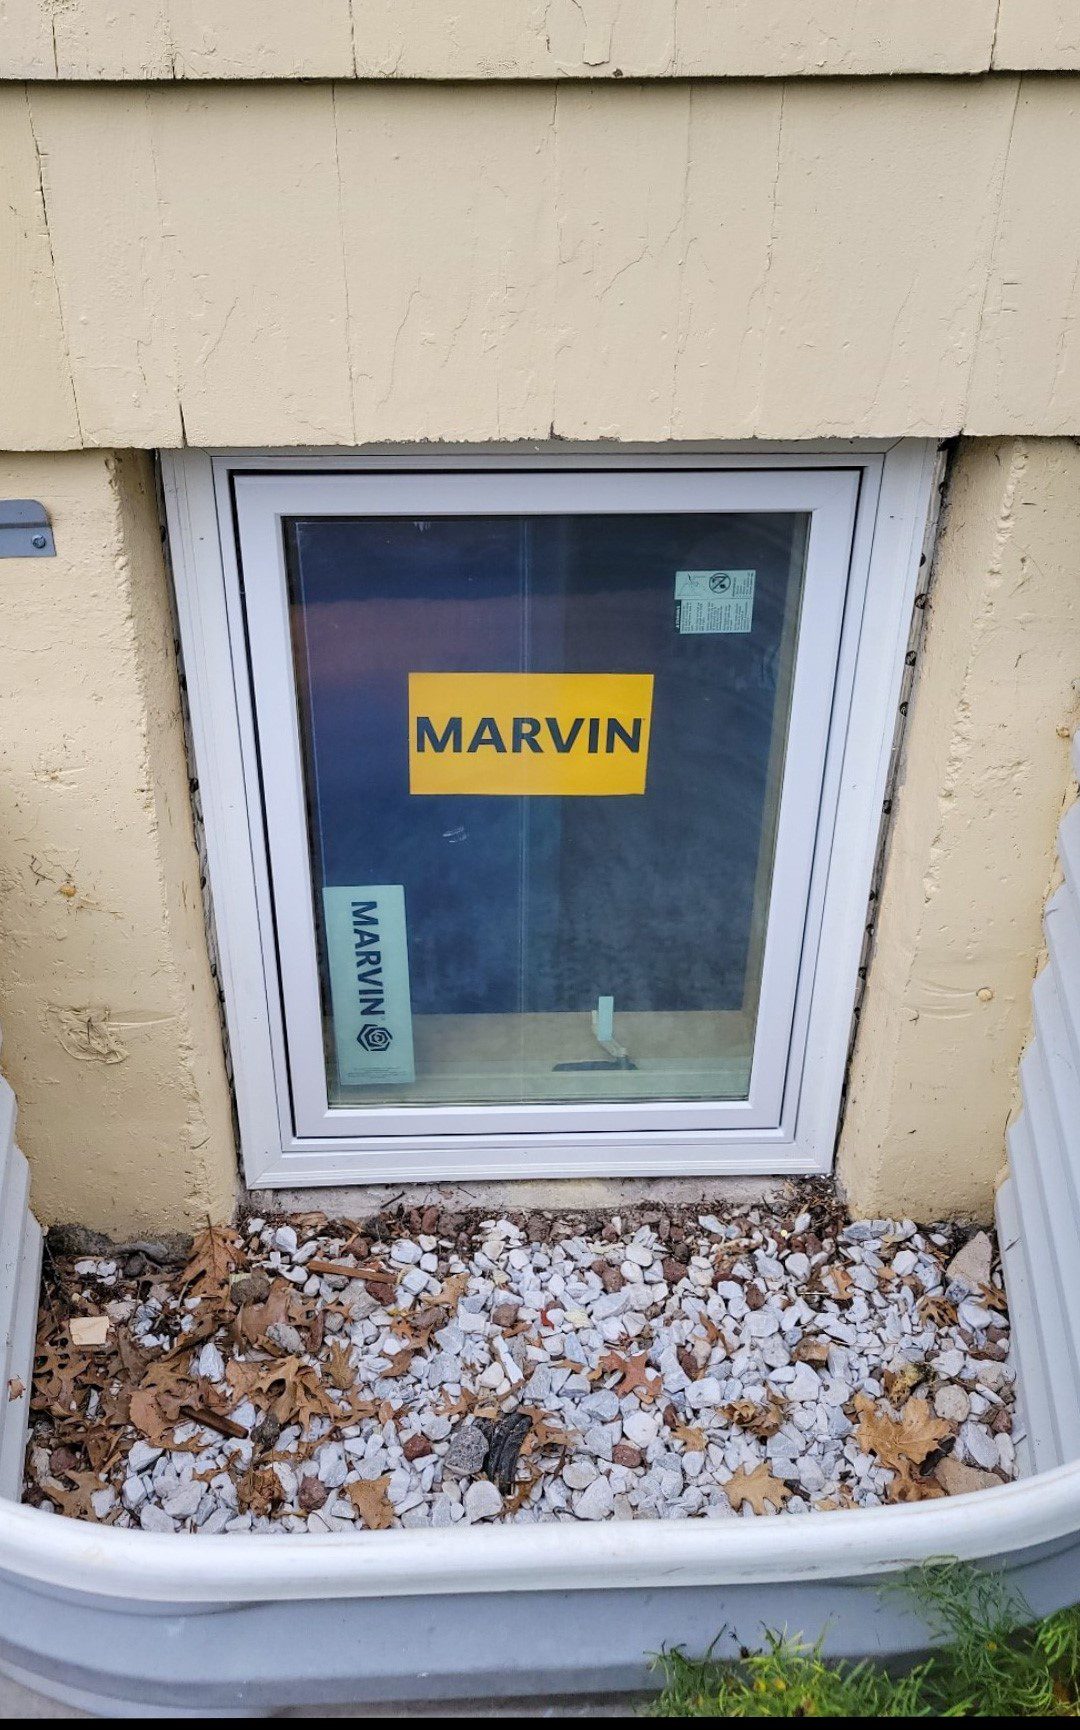 MARVIN
MARVIN O
